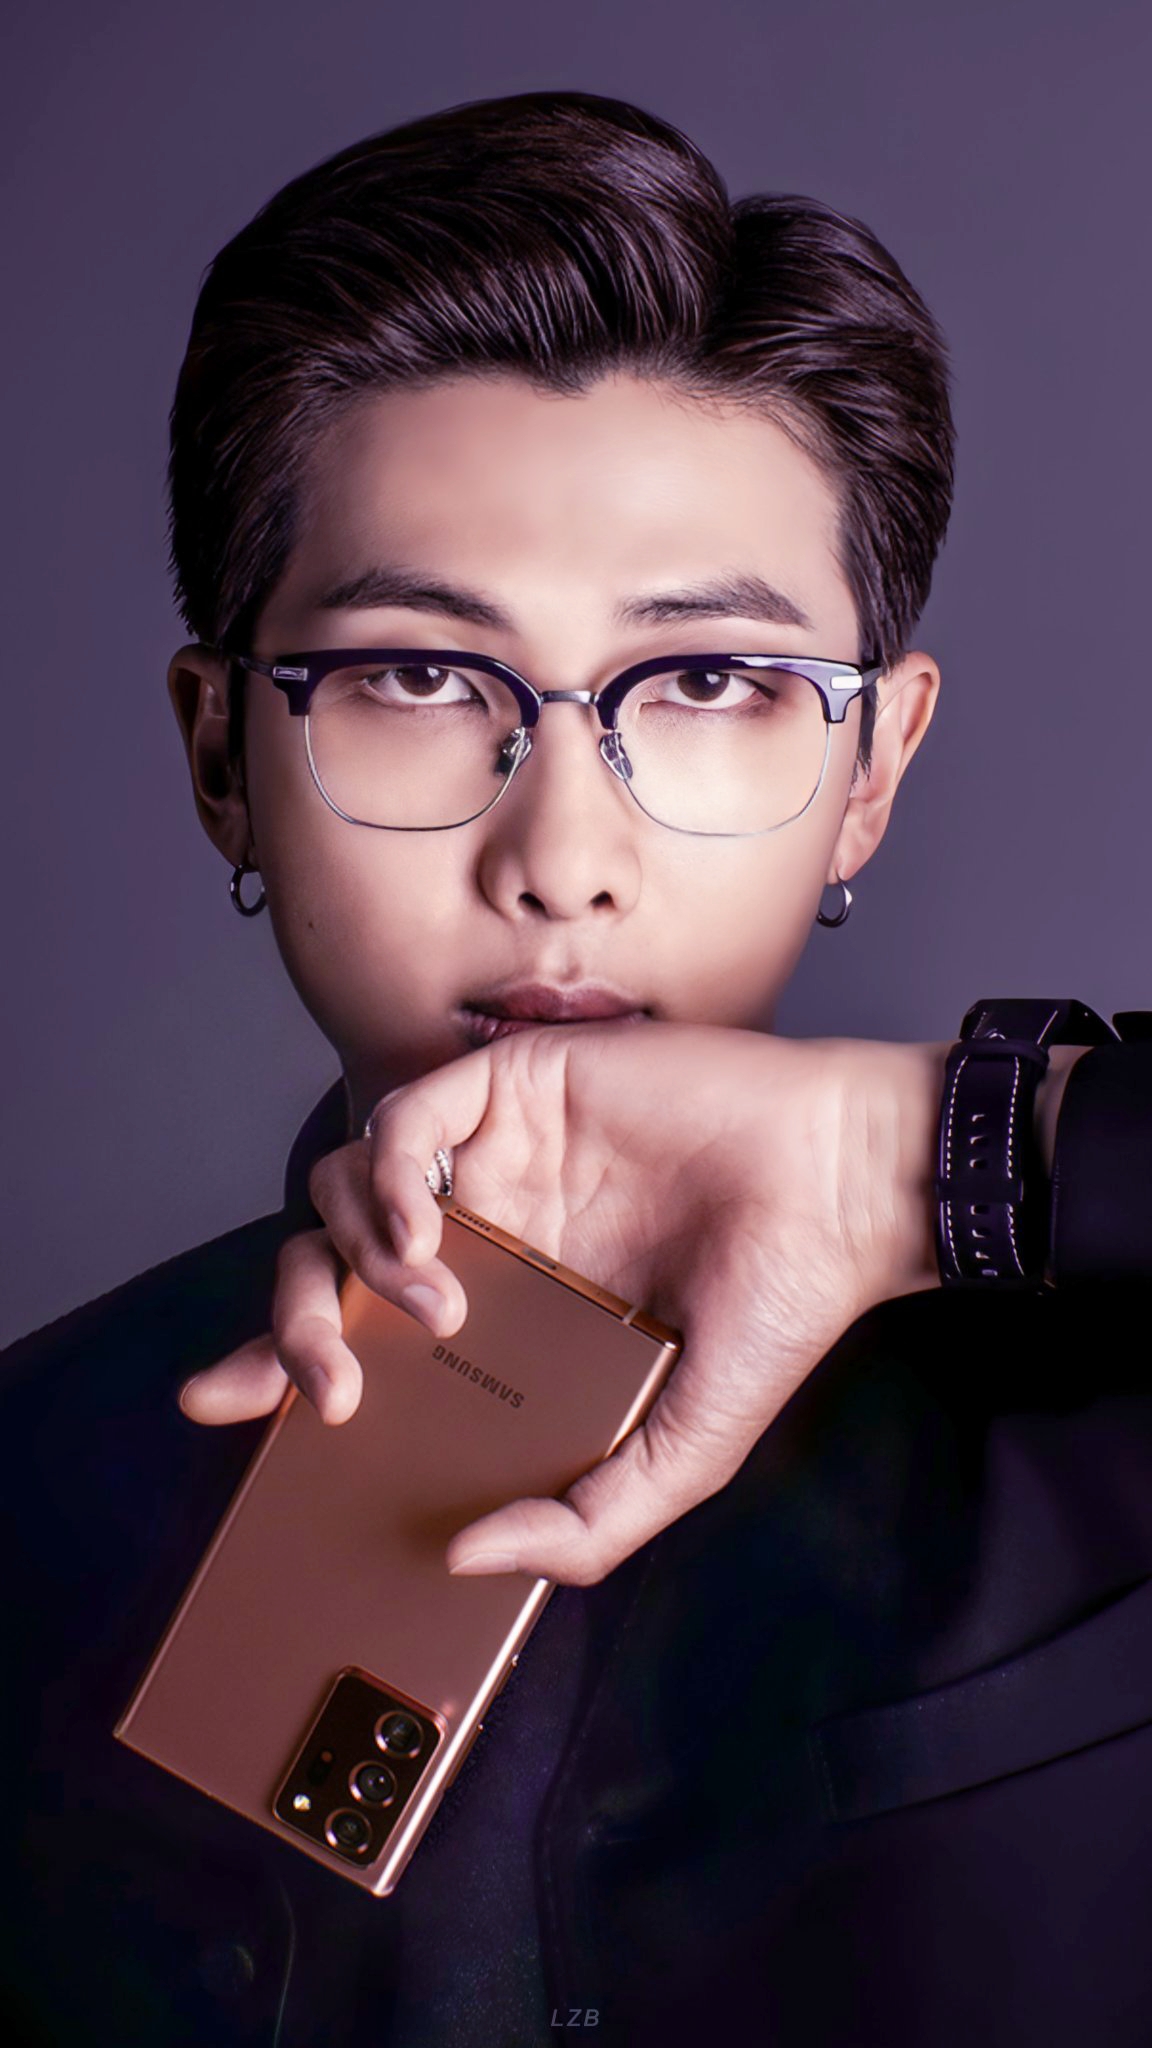  BTS  RM x  Samsung  Lockscreen Wallpaper  02 K POP STOCK